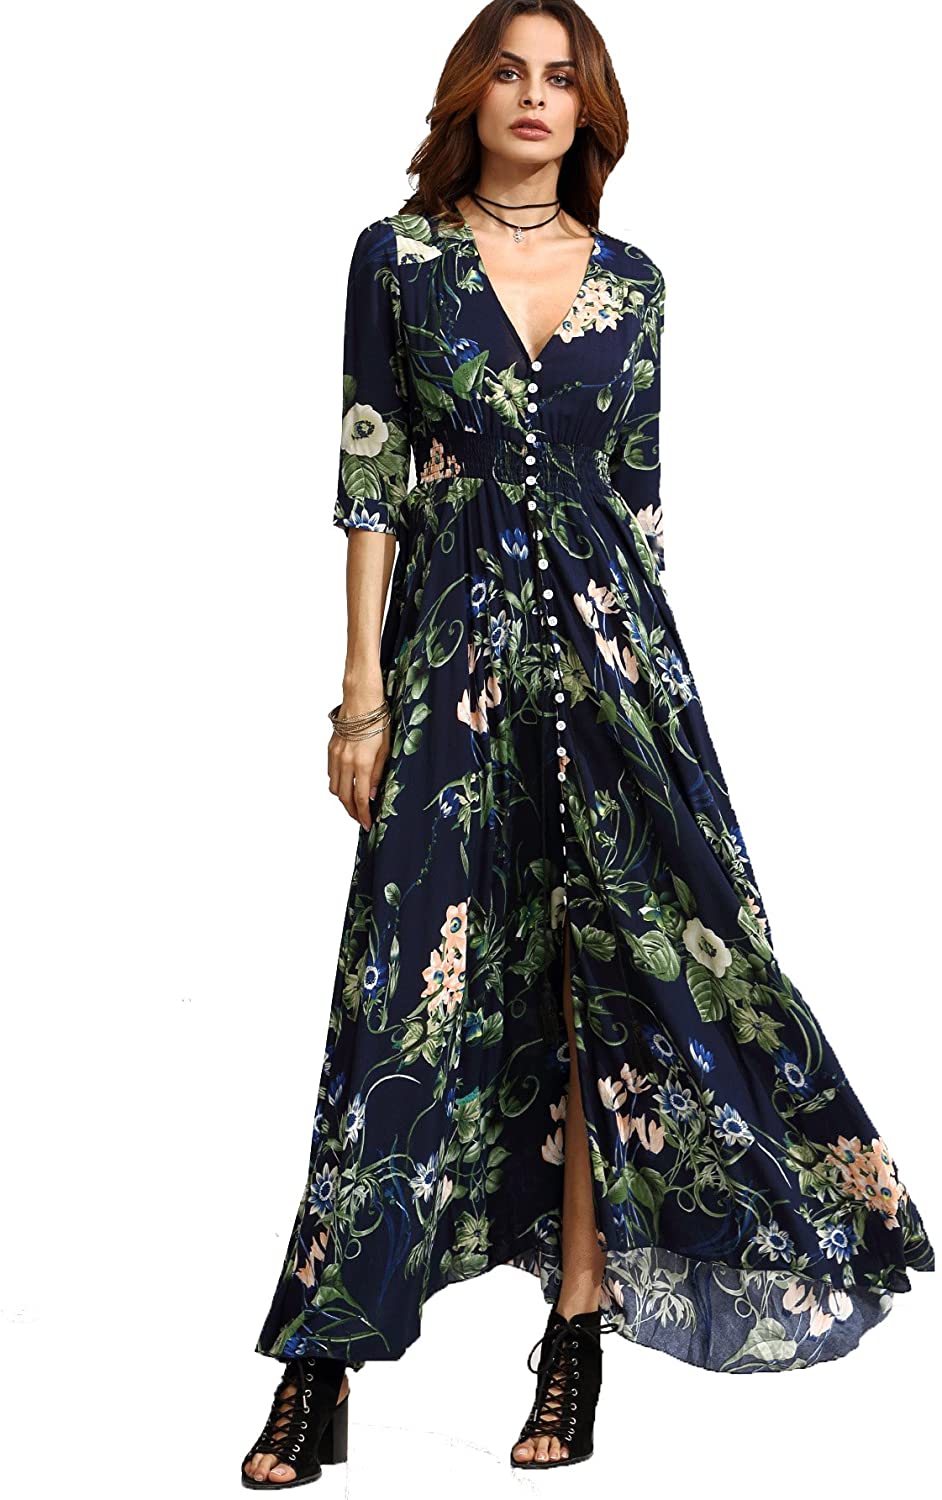 Milumia Women S Button Up Split Floral Print Flowy Lady Maxi Dress Green Ebay